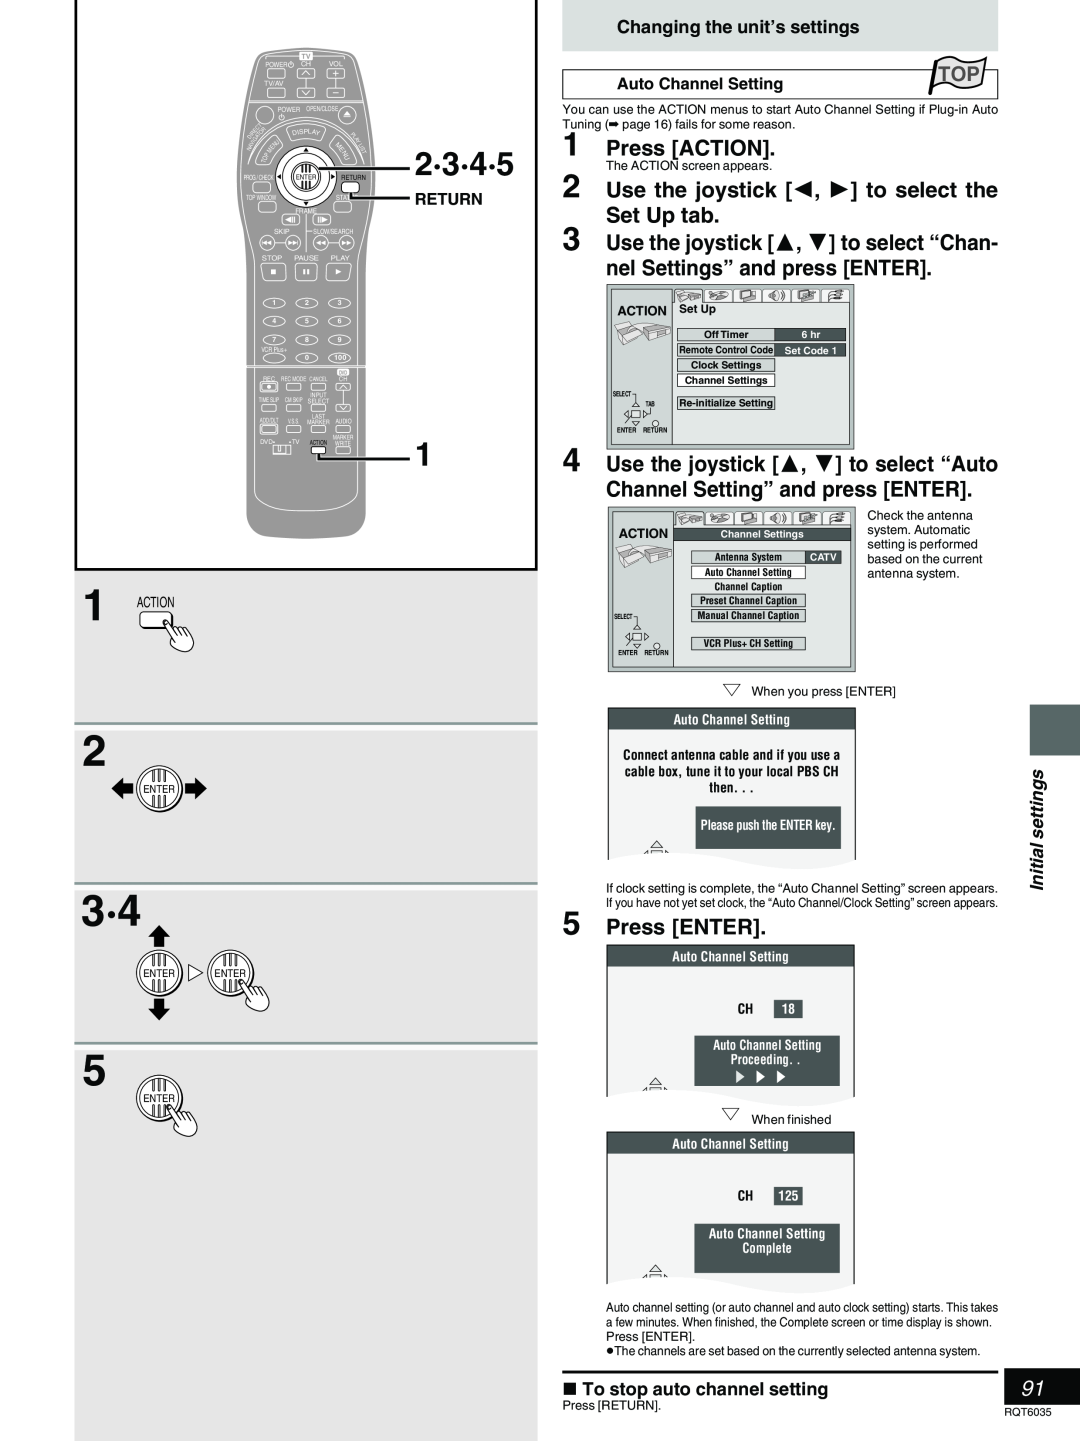 Panasonic DMR-E20 2·3·4·5, Set Up tab, Use the joystick 3, 4 to select “Auto, Channel Setting” and press ENTER, Return 